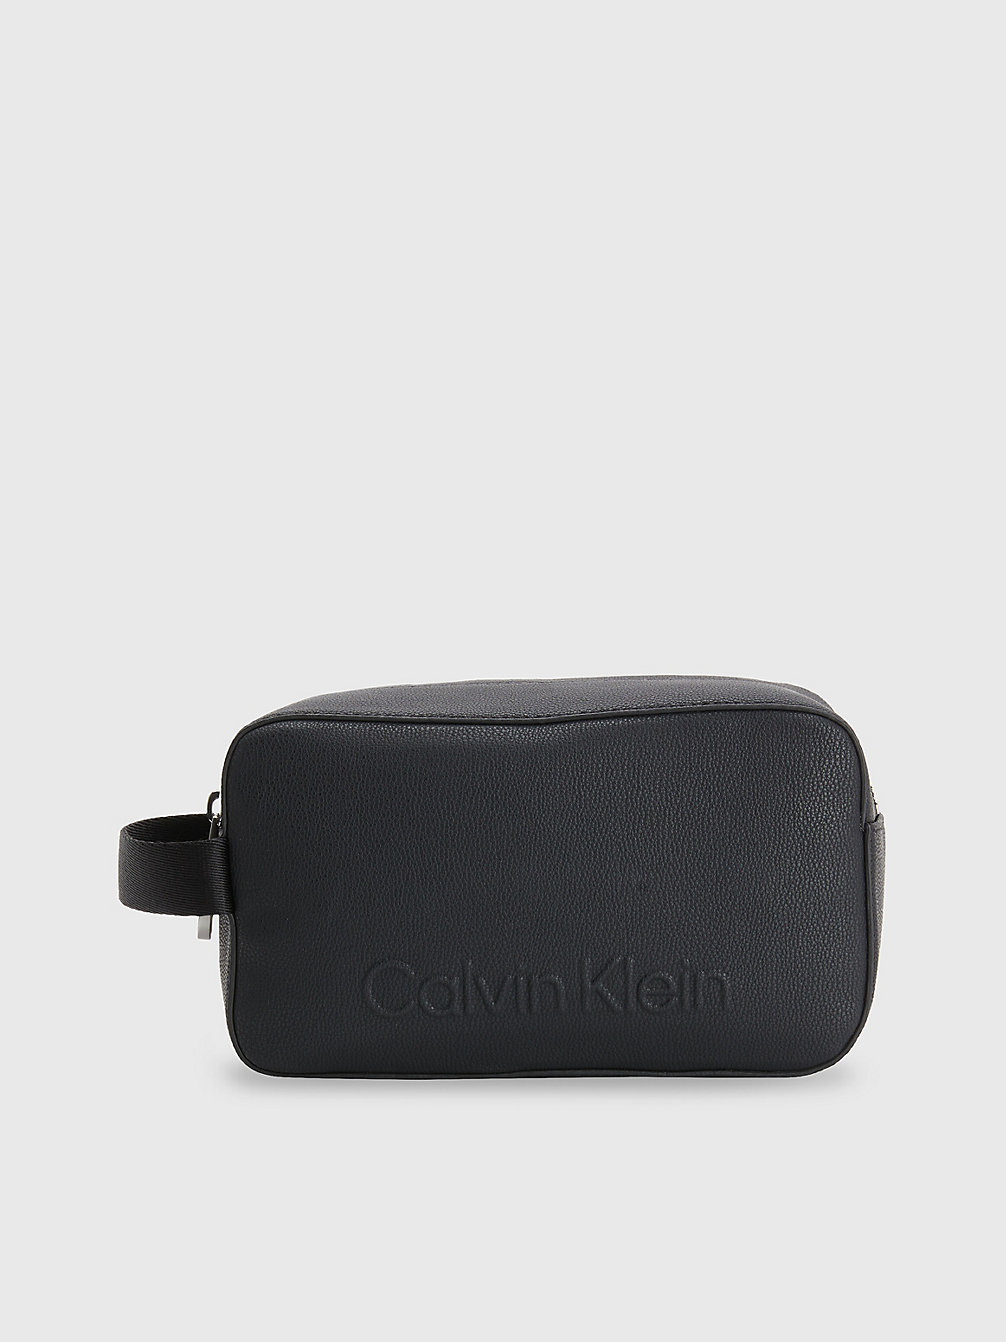 CK BLACK > Kulturbeutel Aus Recyceltem Material > undefined men - Calvin Klein